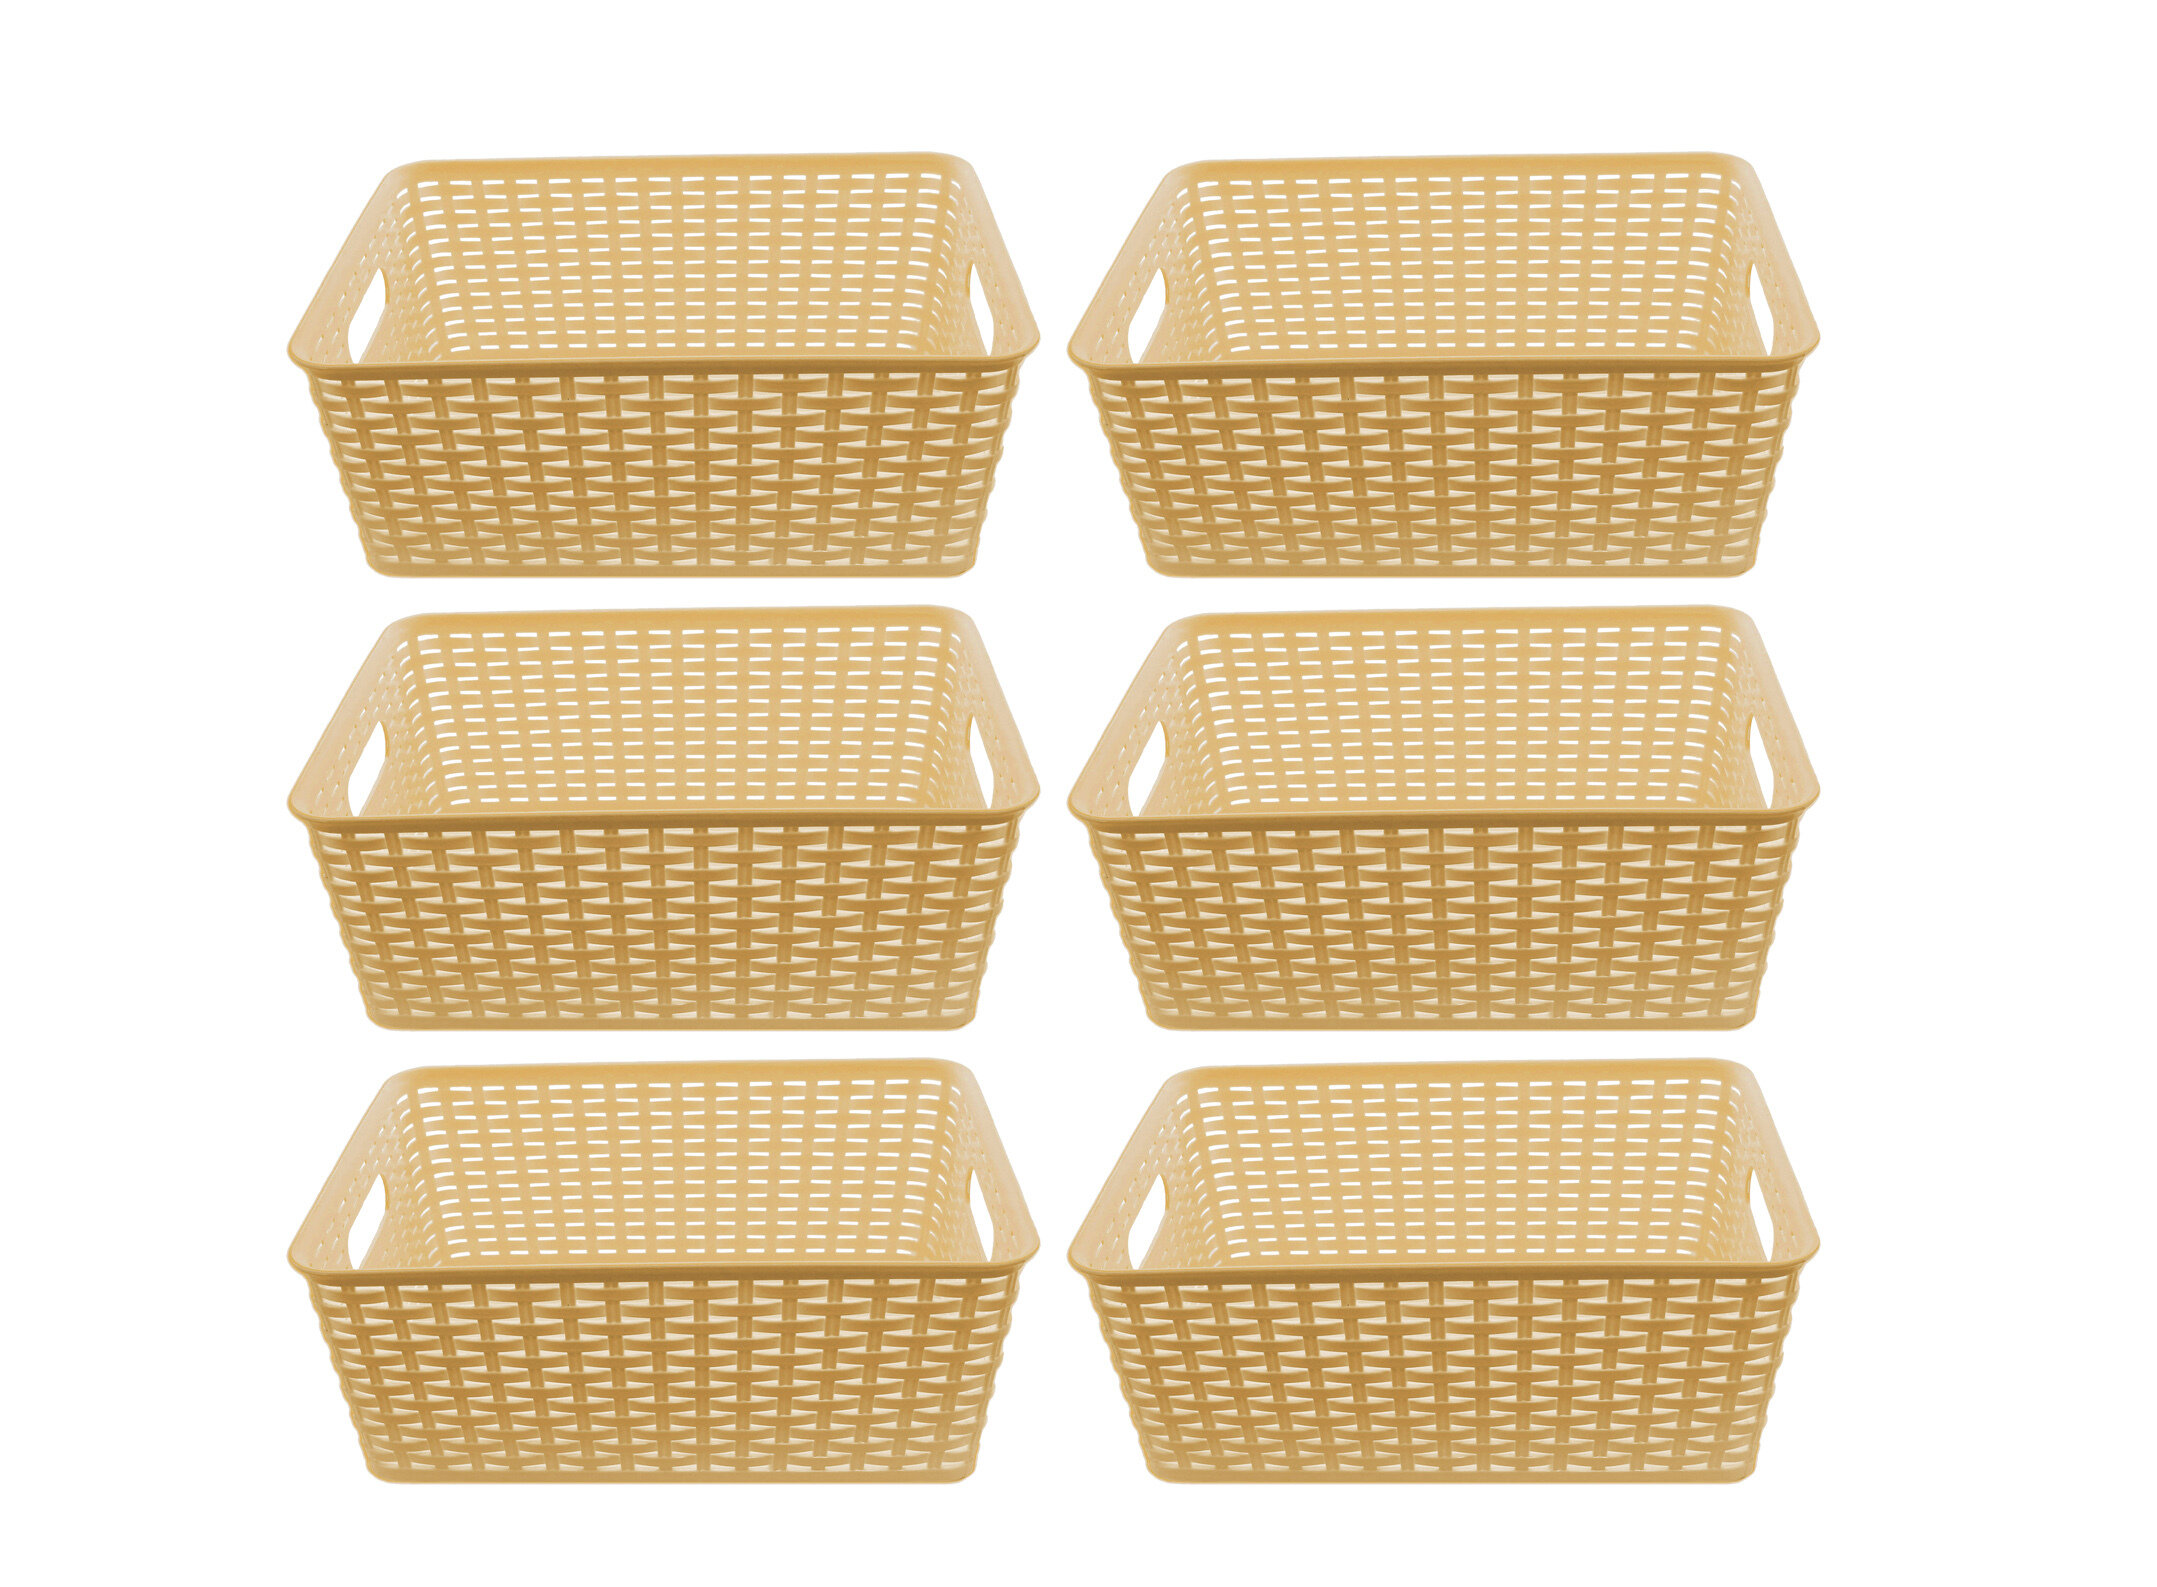 YBM Home Plastic Rattan Storage Box Basket Organizer for Bathroom, Large,  Gray 